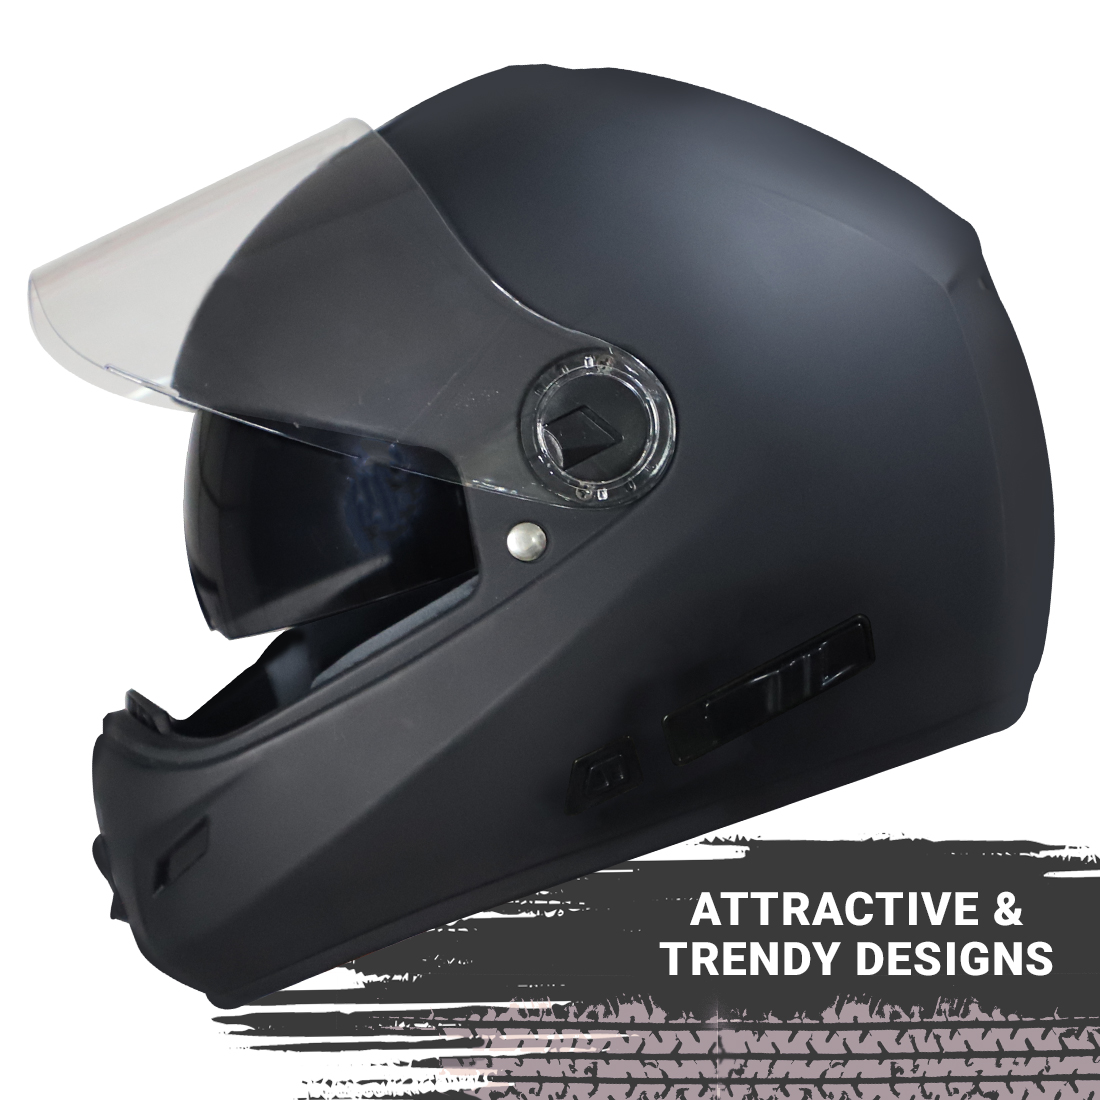 Steelbird SB-39 Cyborg ISI Certified Full Face Helmet For Men And Women With Sun Shield (Matt Black)